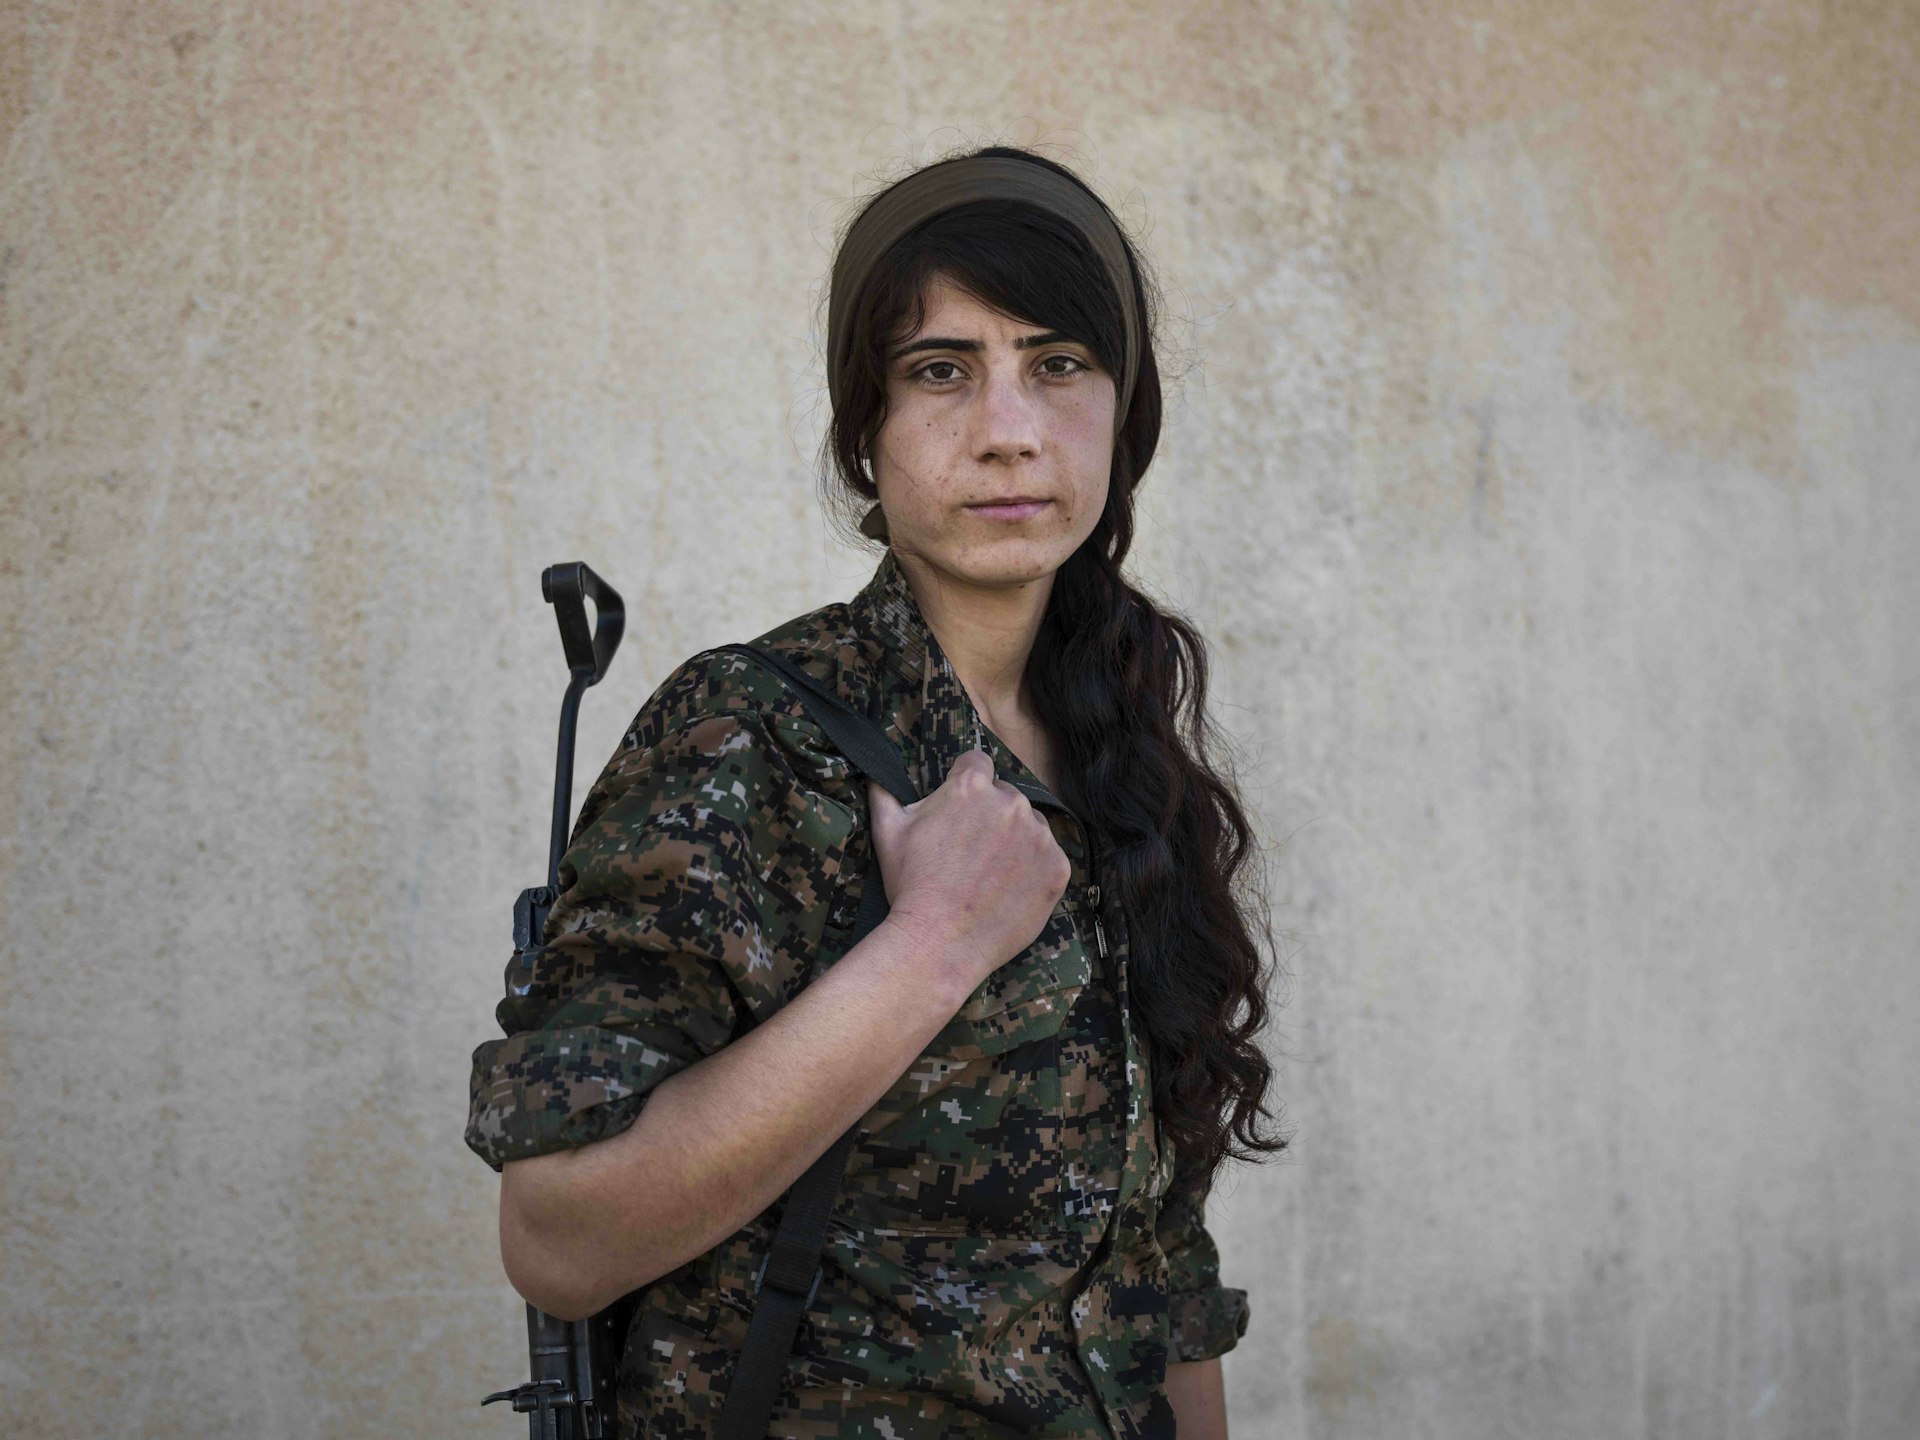 Rojava Suzdar, 21, photographed in Serikani, Syria by Newsha Tavakolian